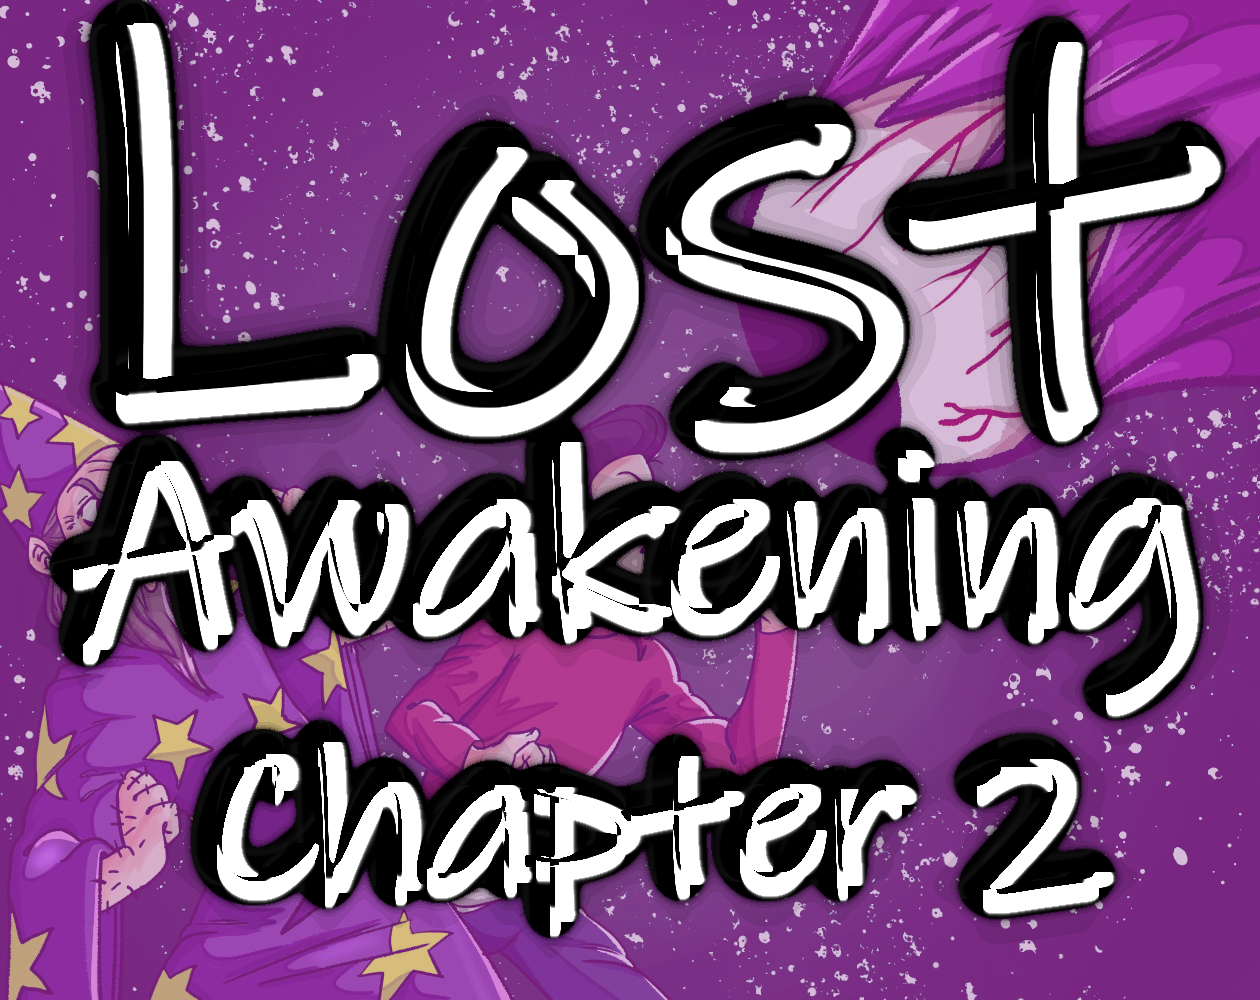 Lost Awakening, Chapter 2 Presskit Image